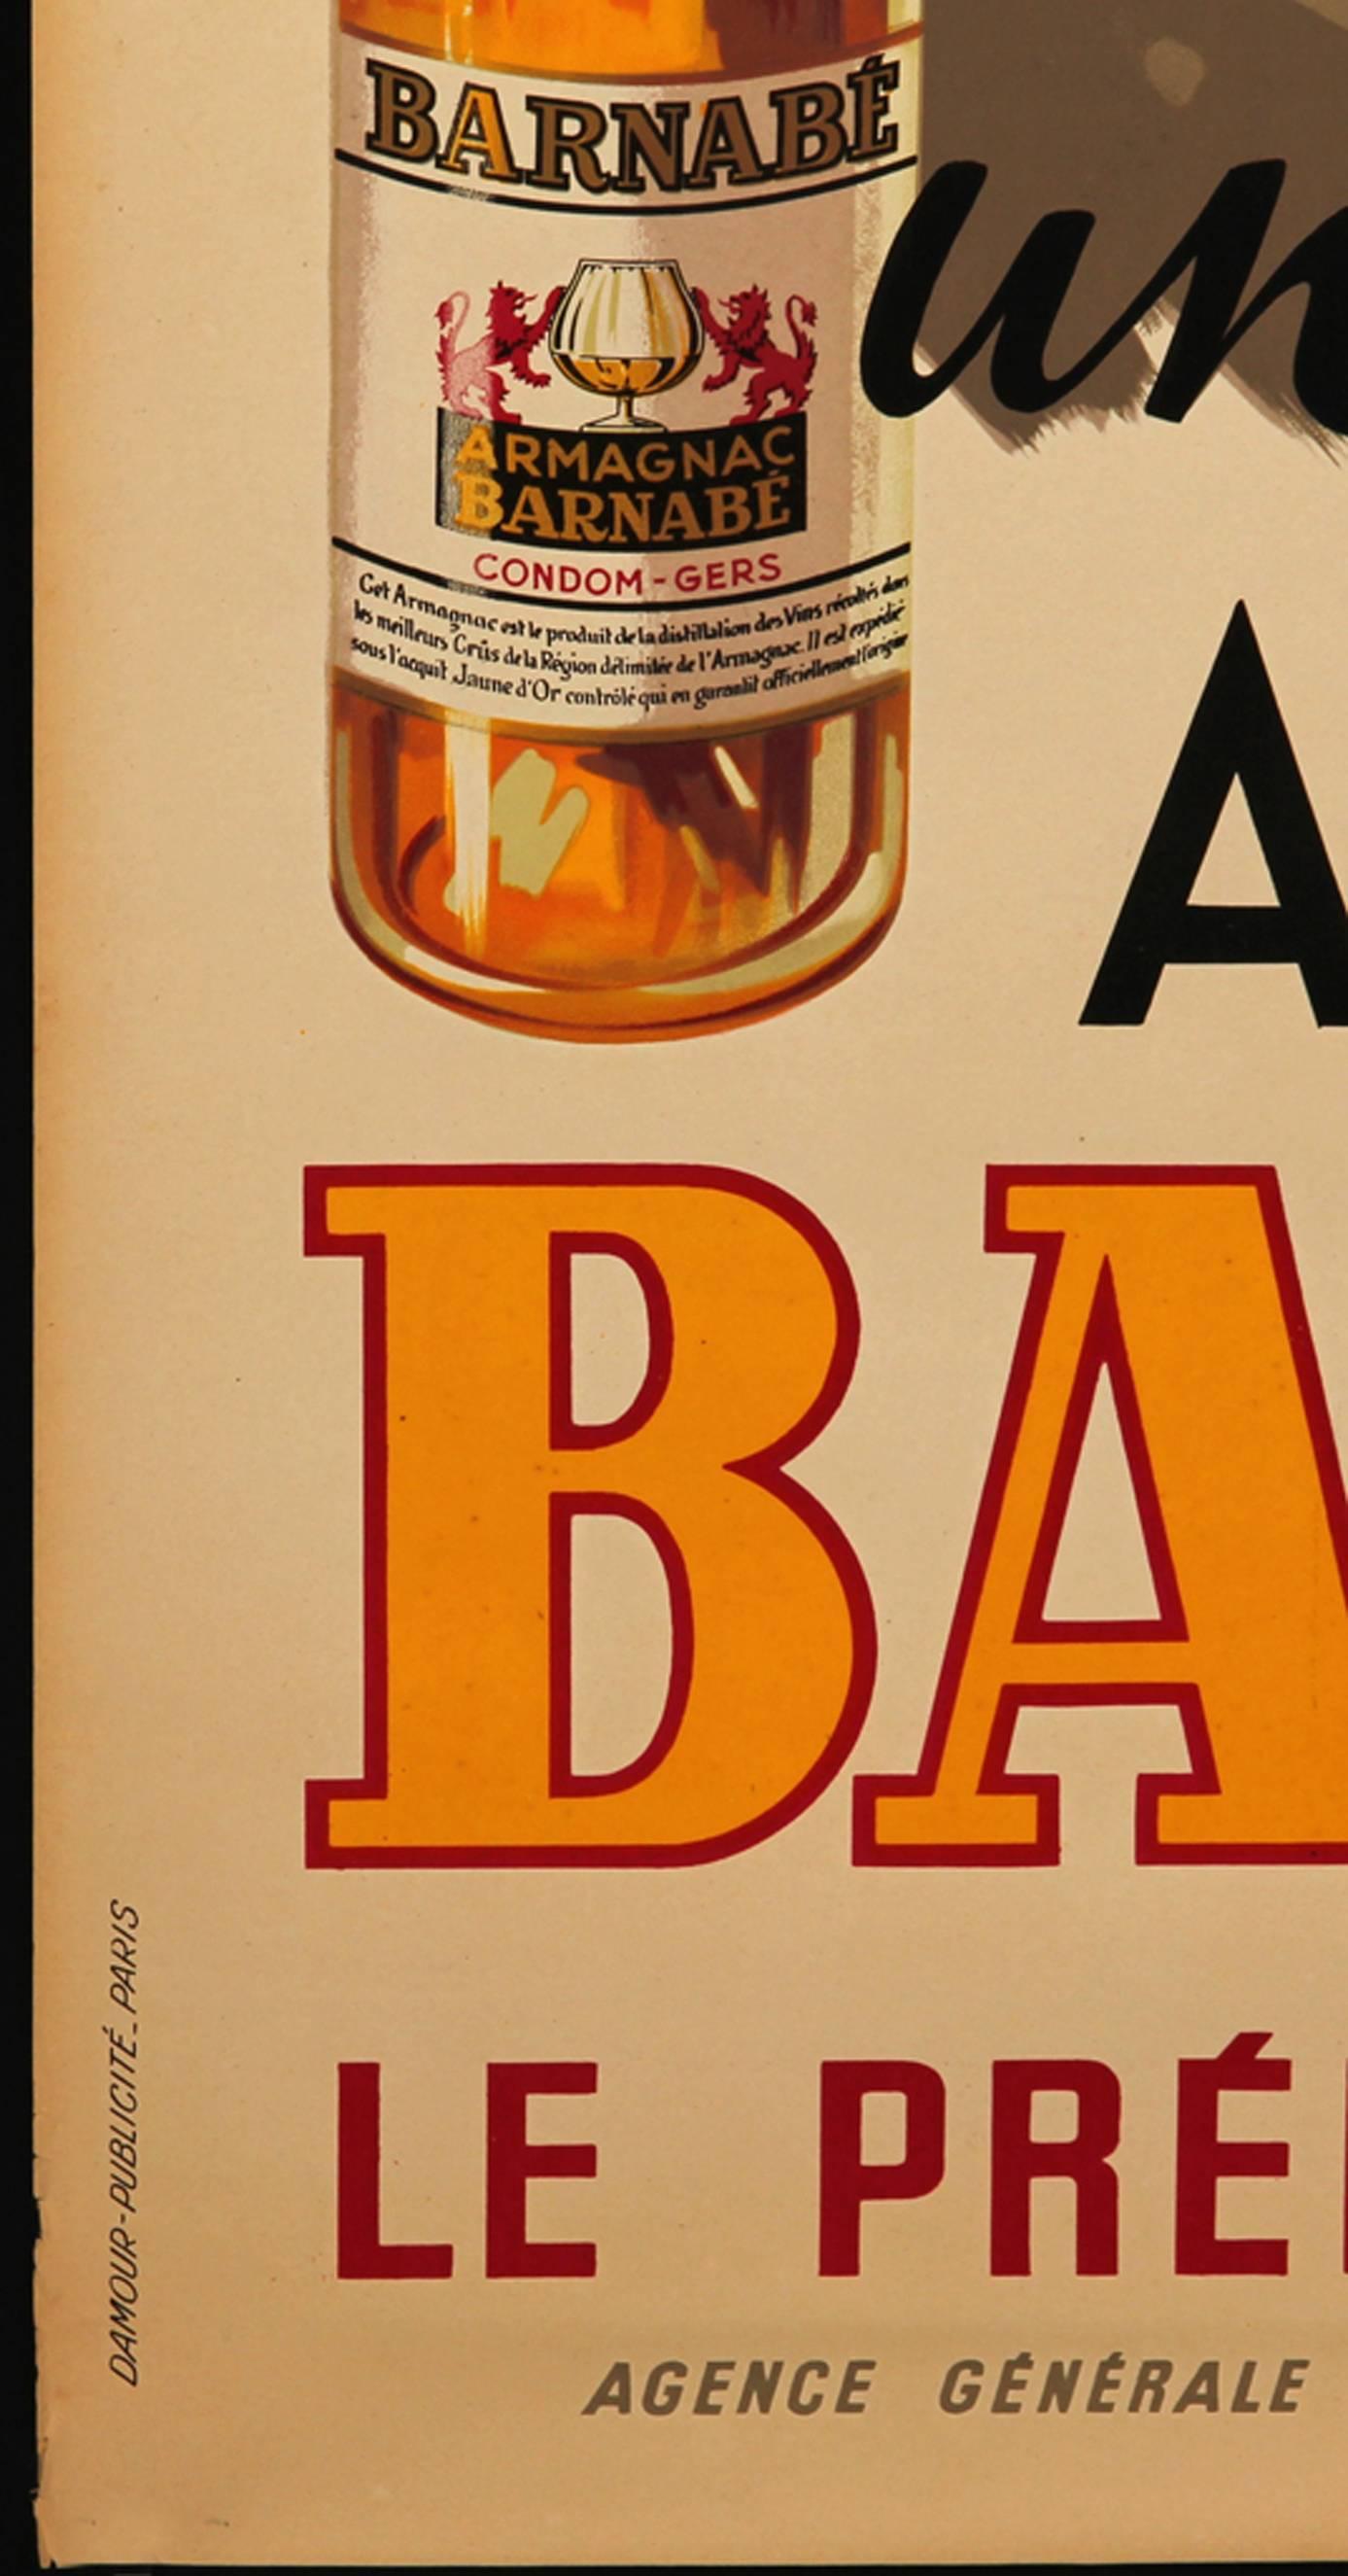 French advertising poster, 'Et pour un dates armagnac Barnabé', lithograph, printed in Damour-publicité, Paris, 1946.
Size 160 x 120 cm. Without frame.
Traces of edge cracks and small spots.
                